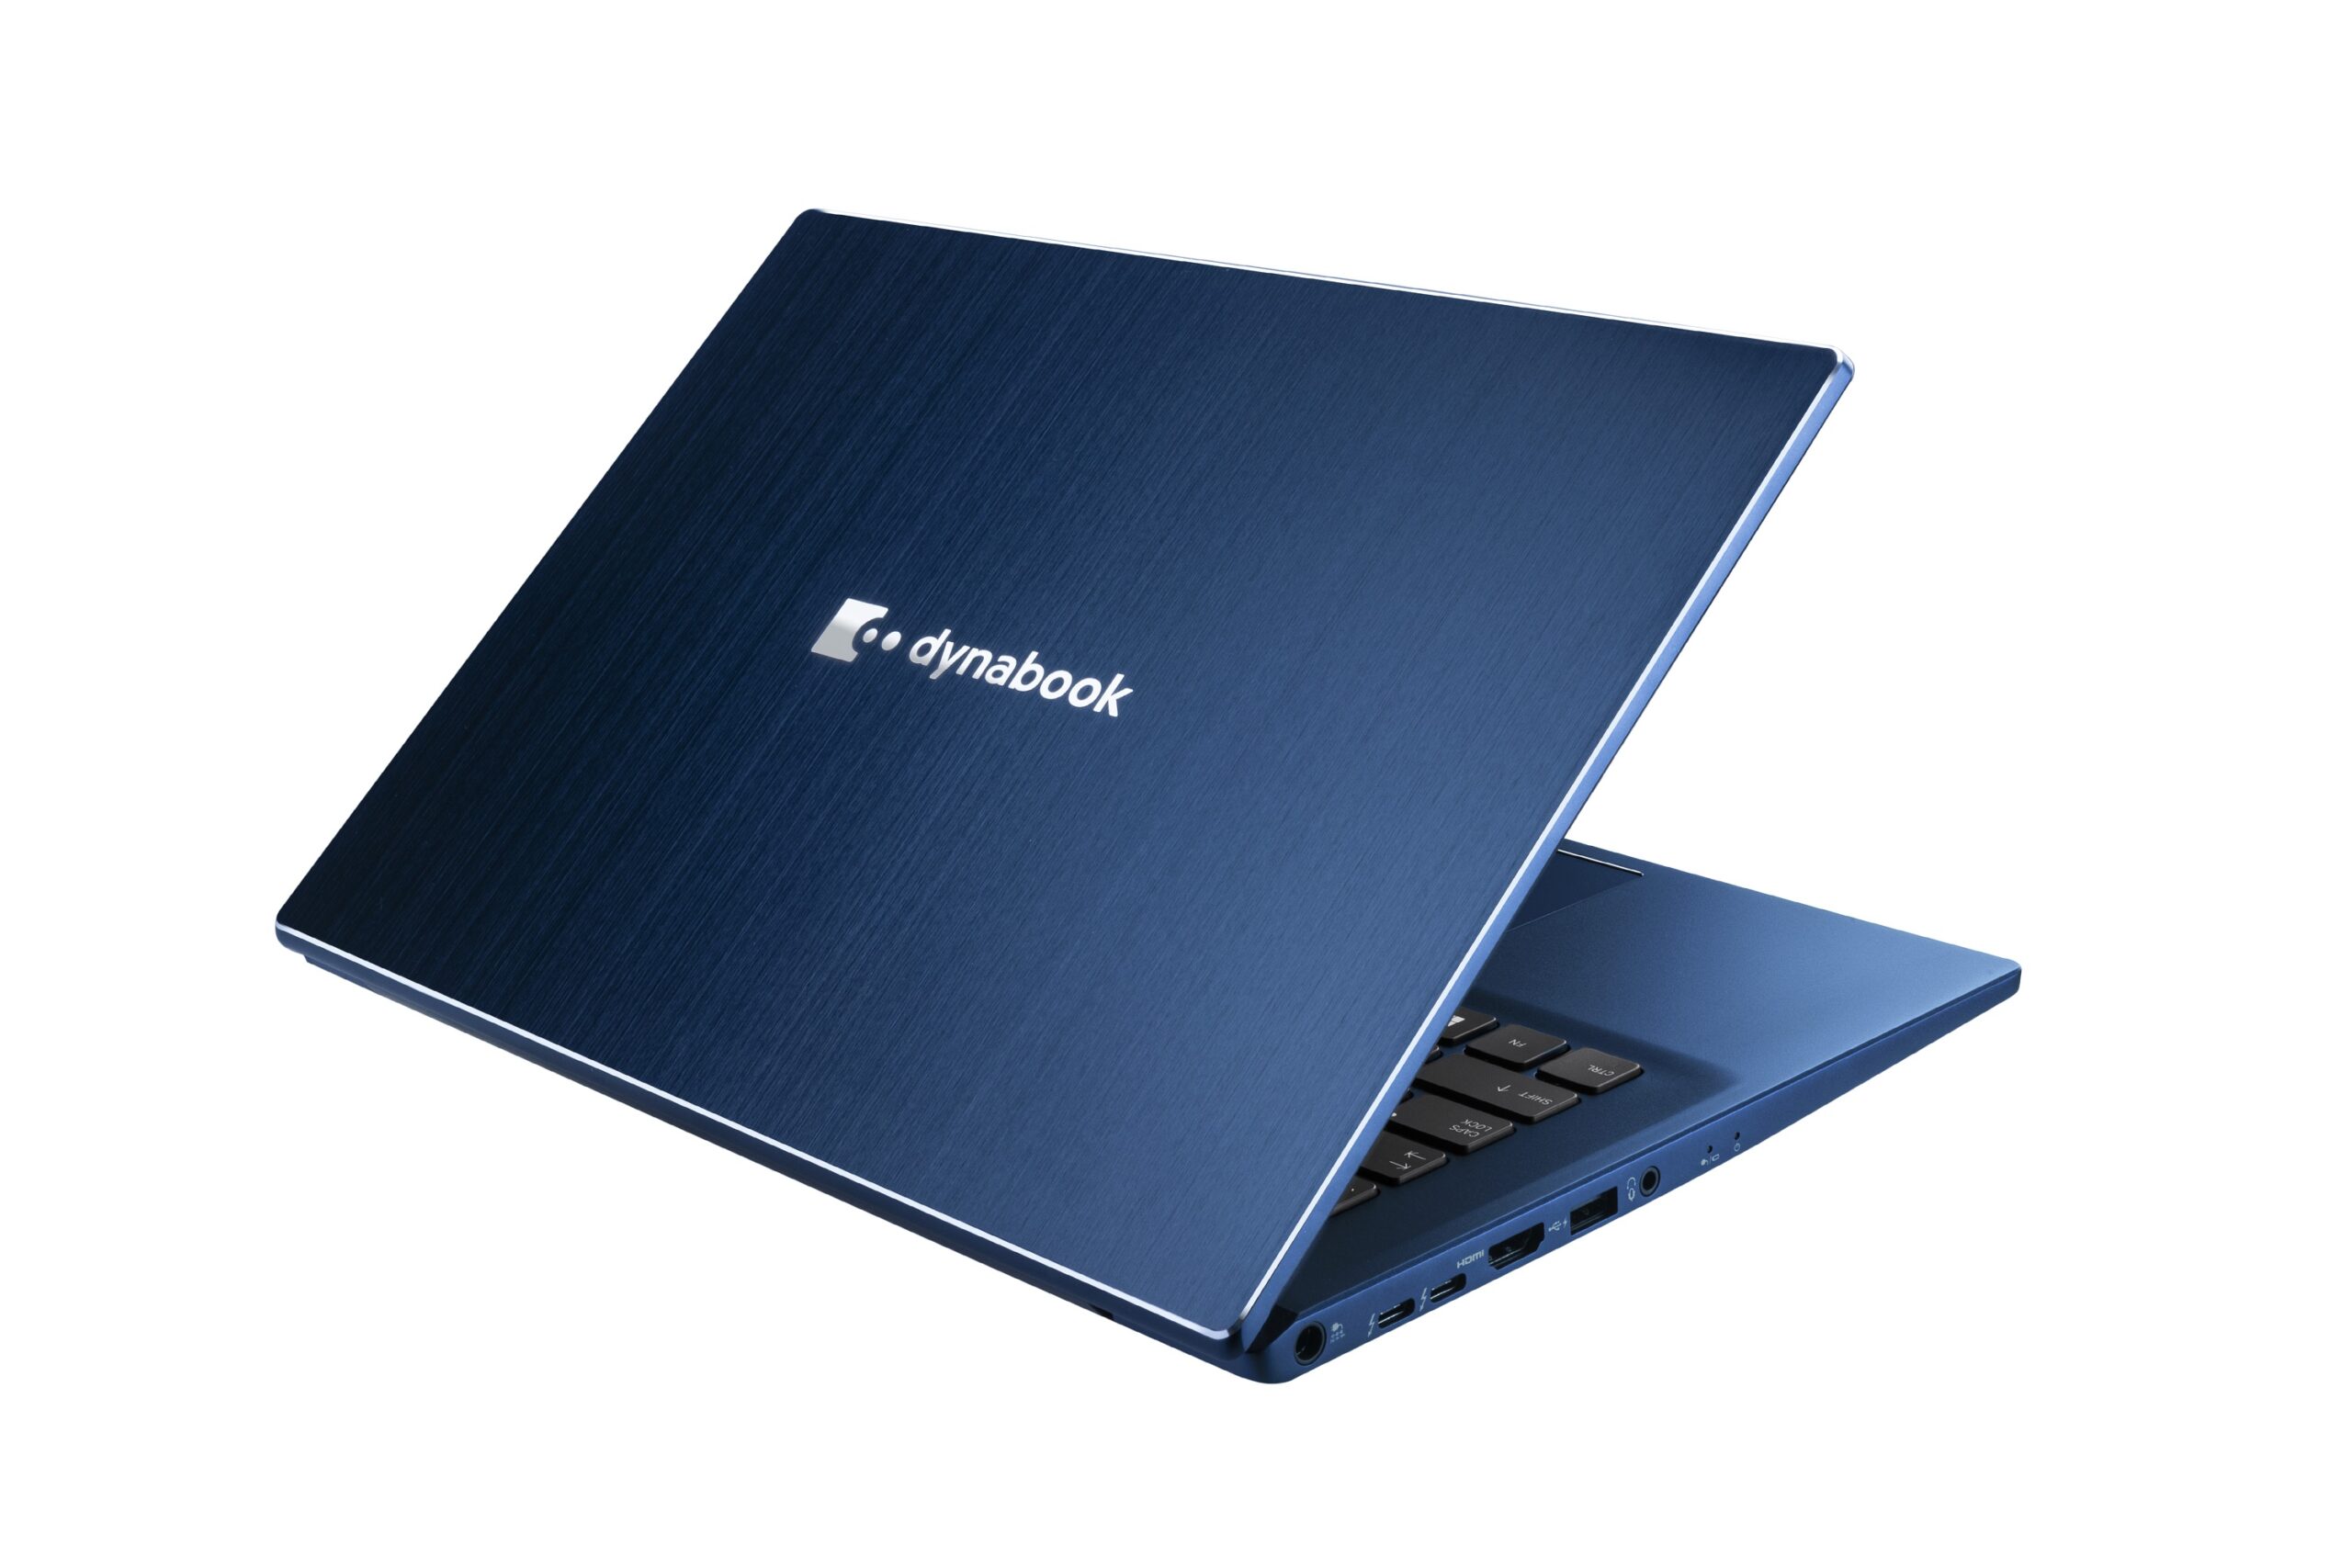 Dynabook Portégé X40-K laptop, lightweight, powerful and secure